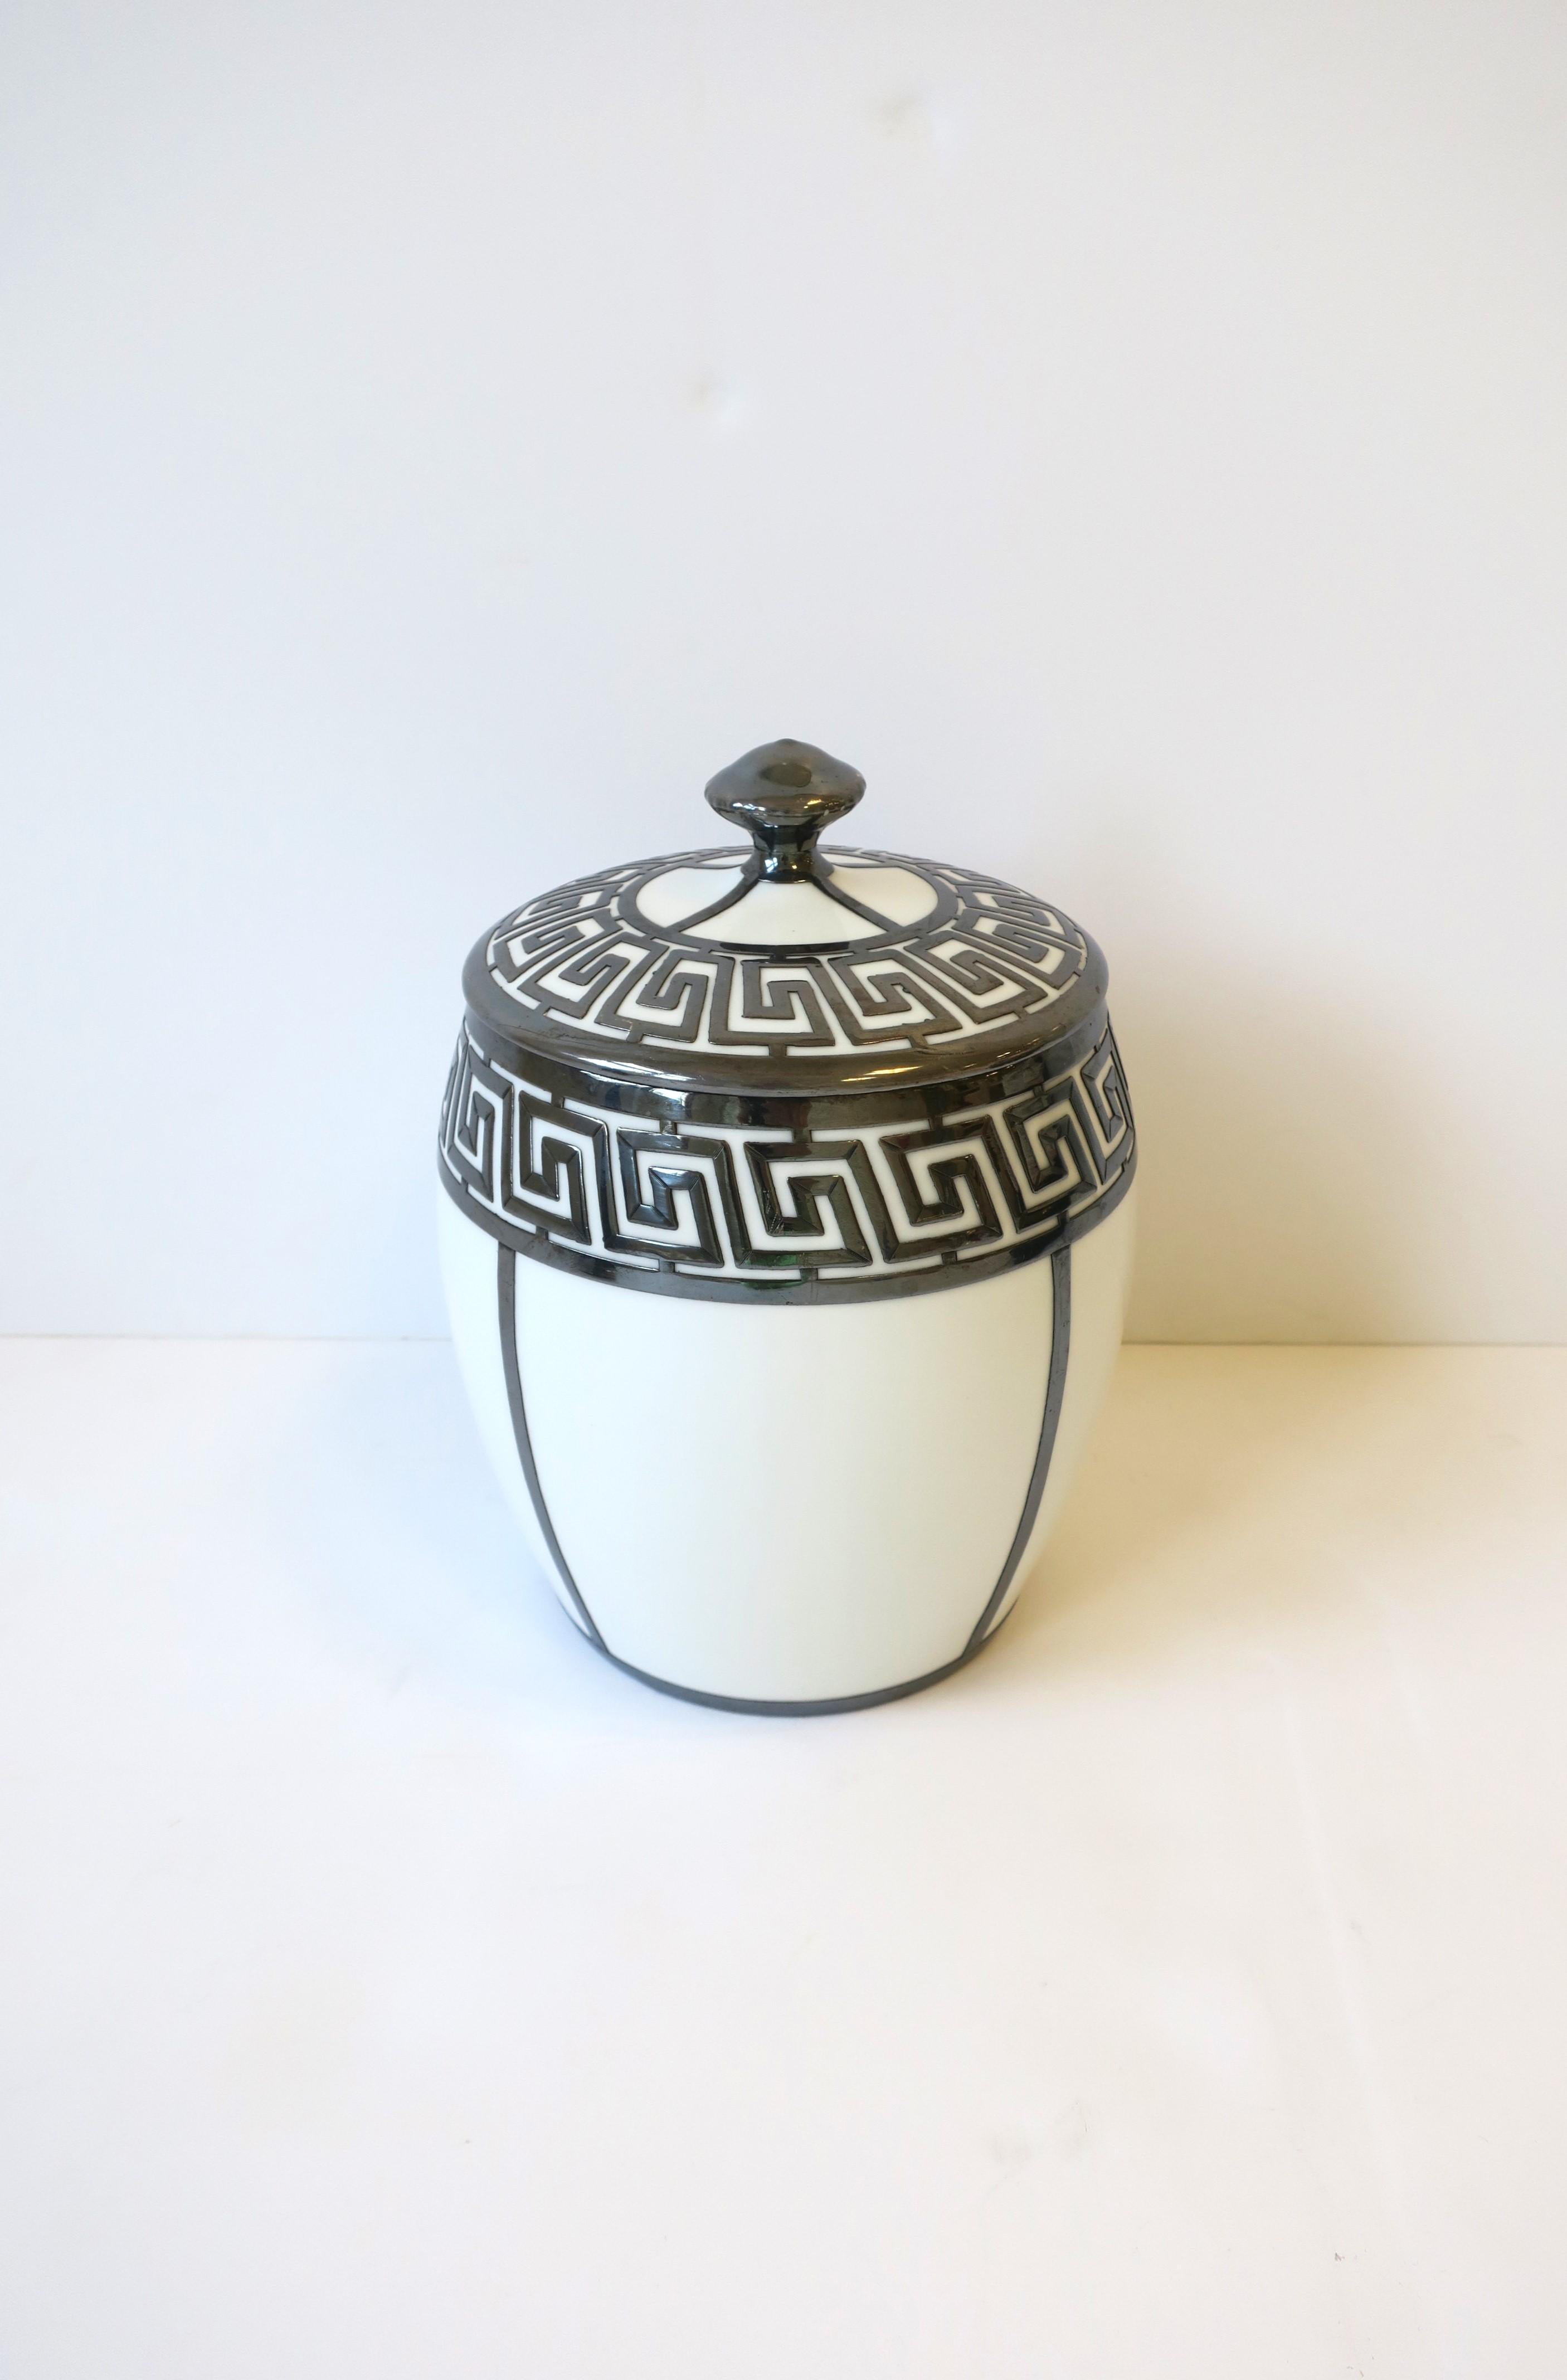 Porcelain French Ice Bucket with Greek-Key Design